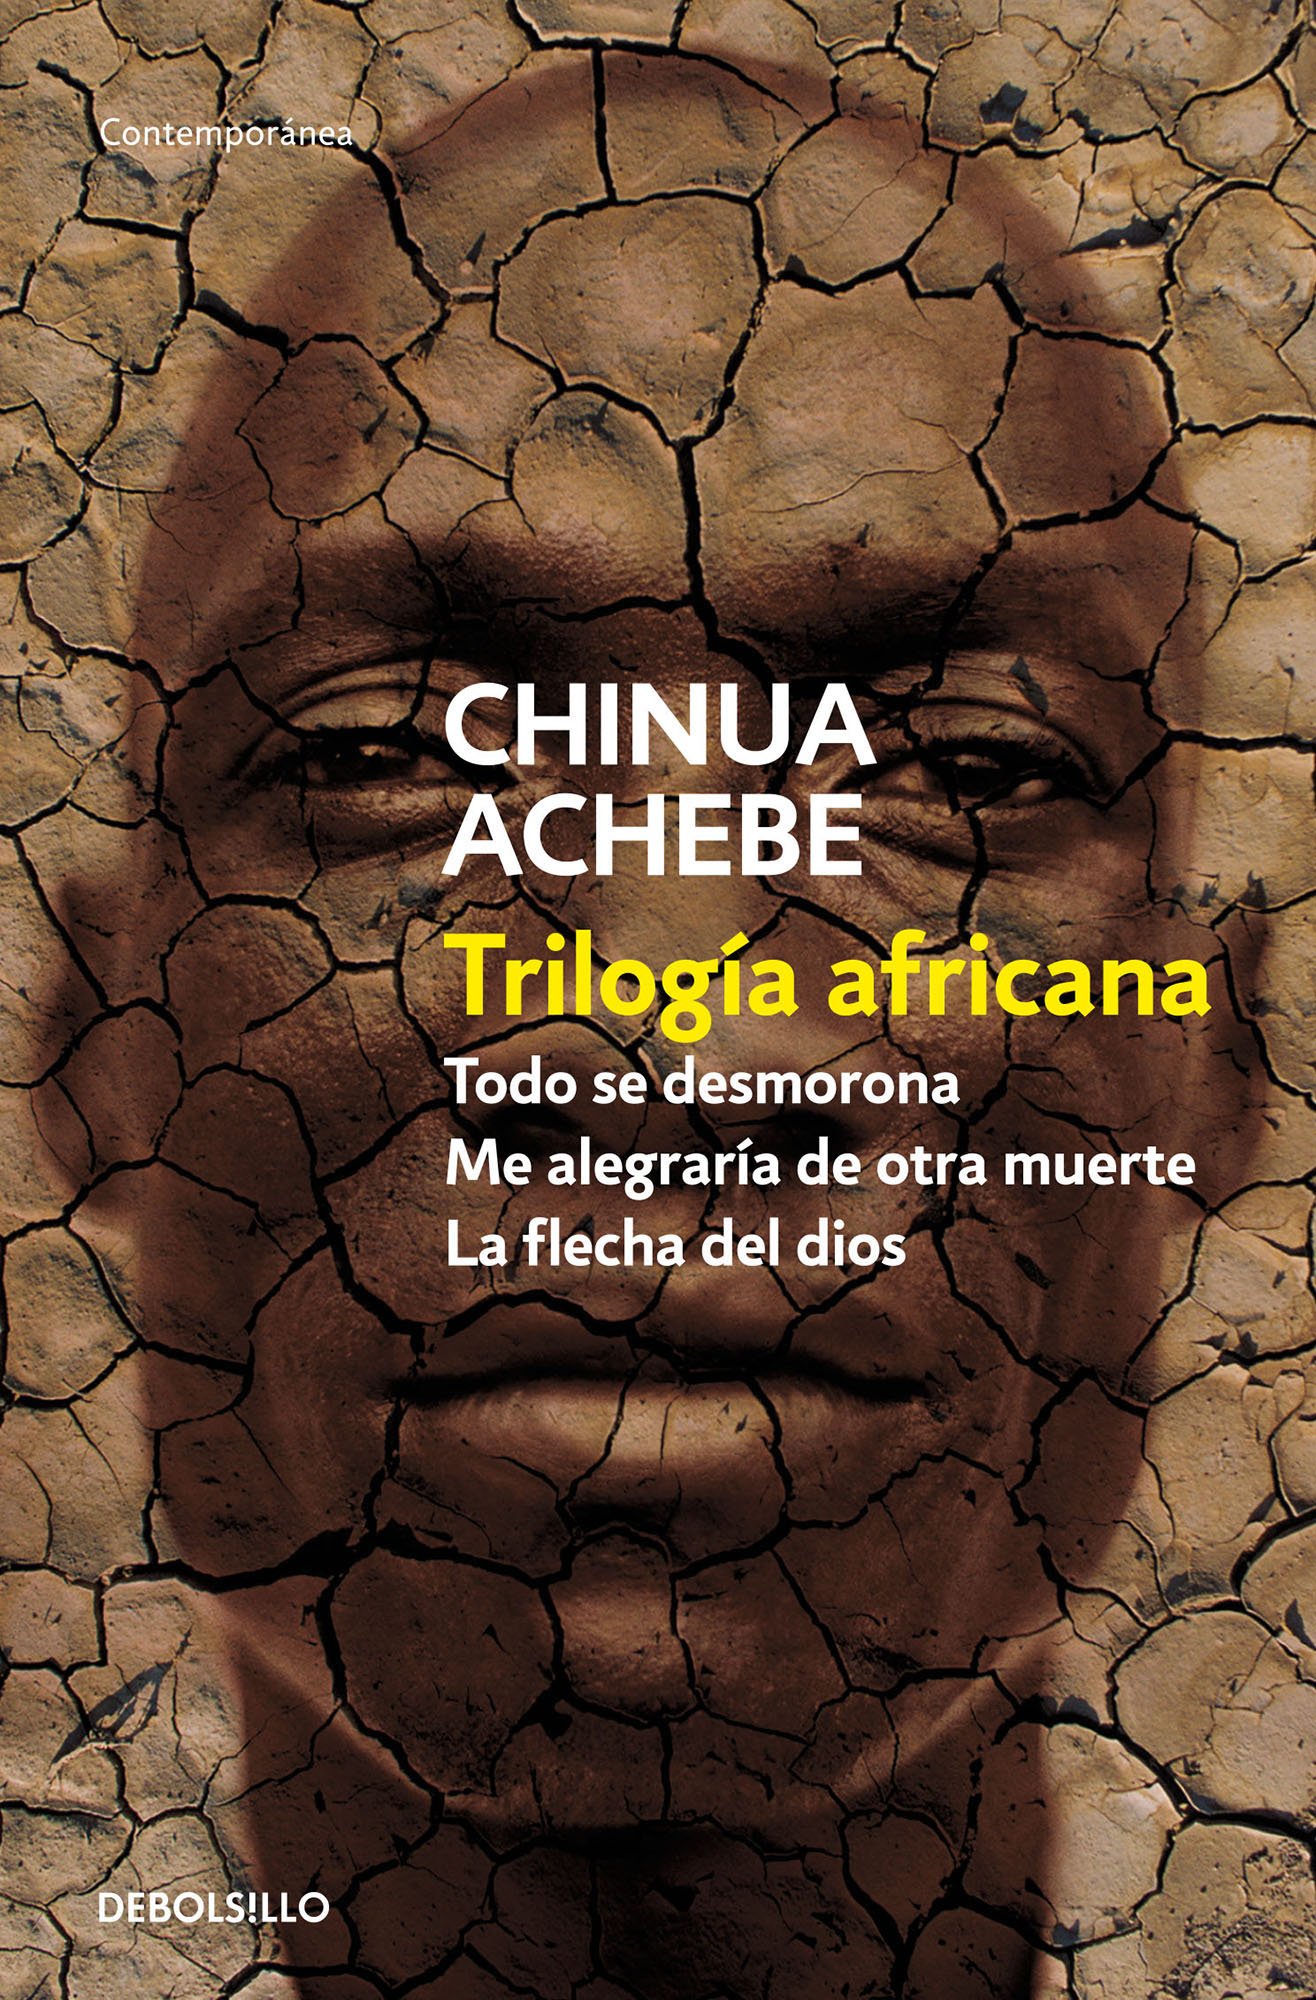 Trilogía africana by Chinua Achebe